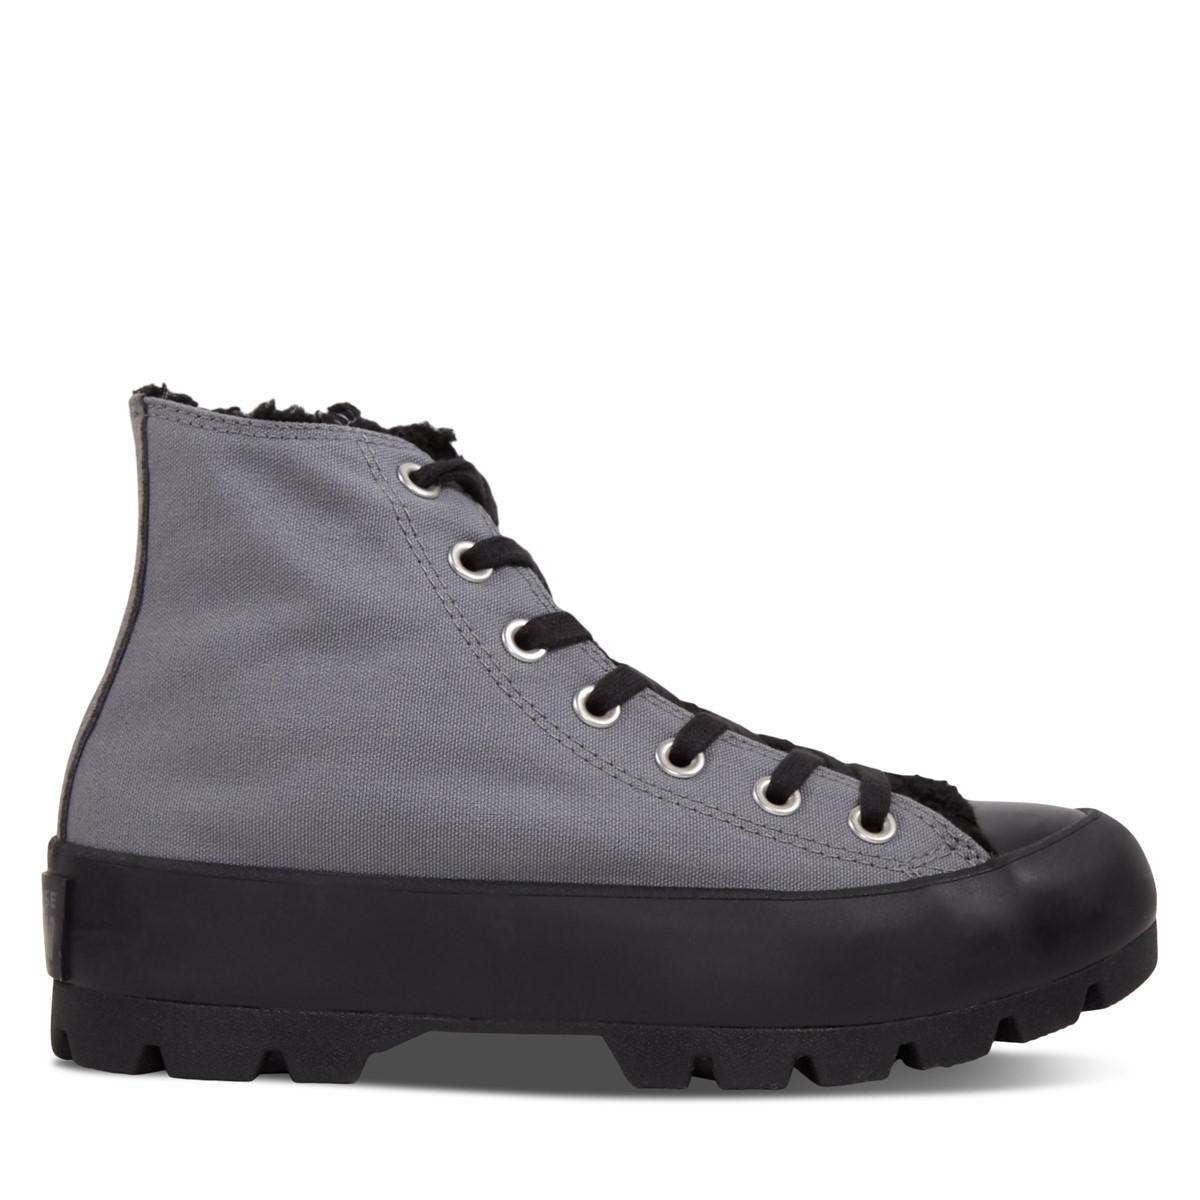 Women's Chuck Taylor All Star Sneaker Boots in Grey/Black | Little Burgundy